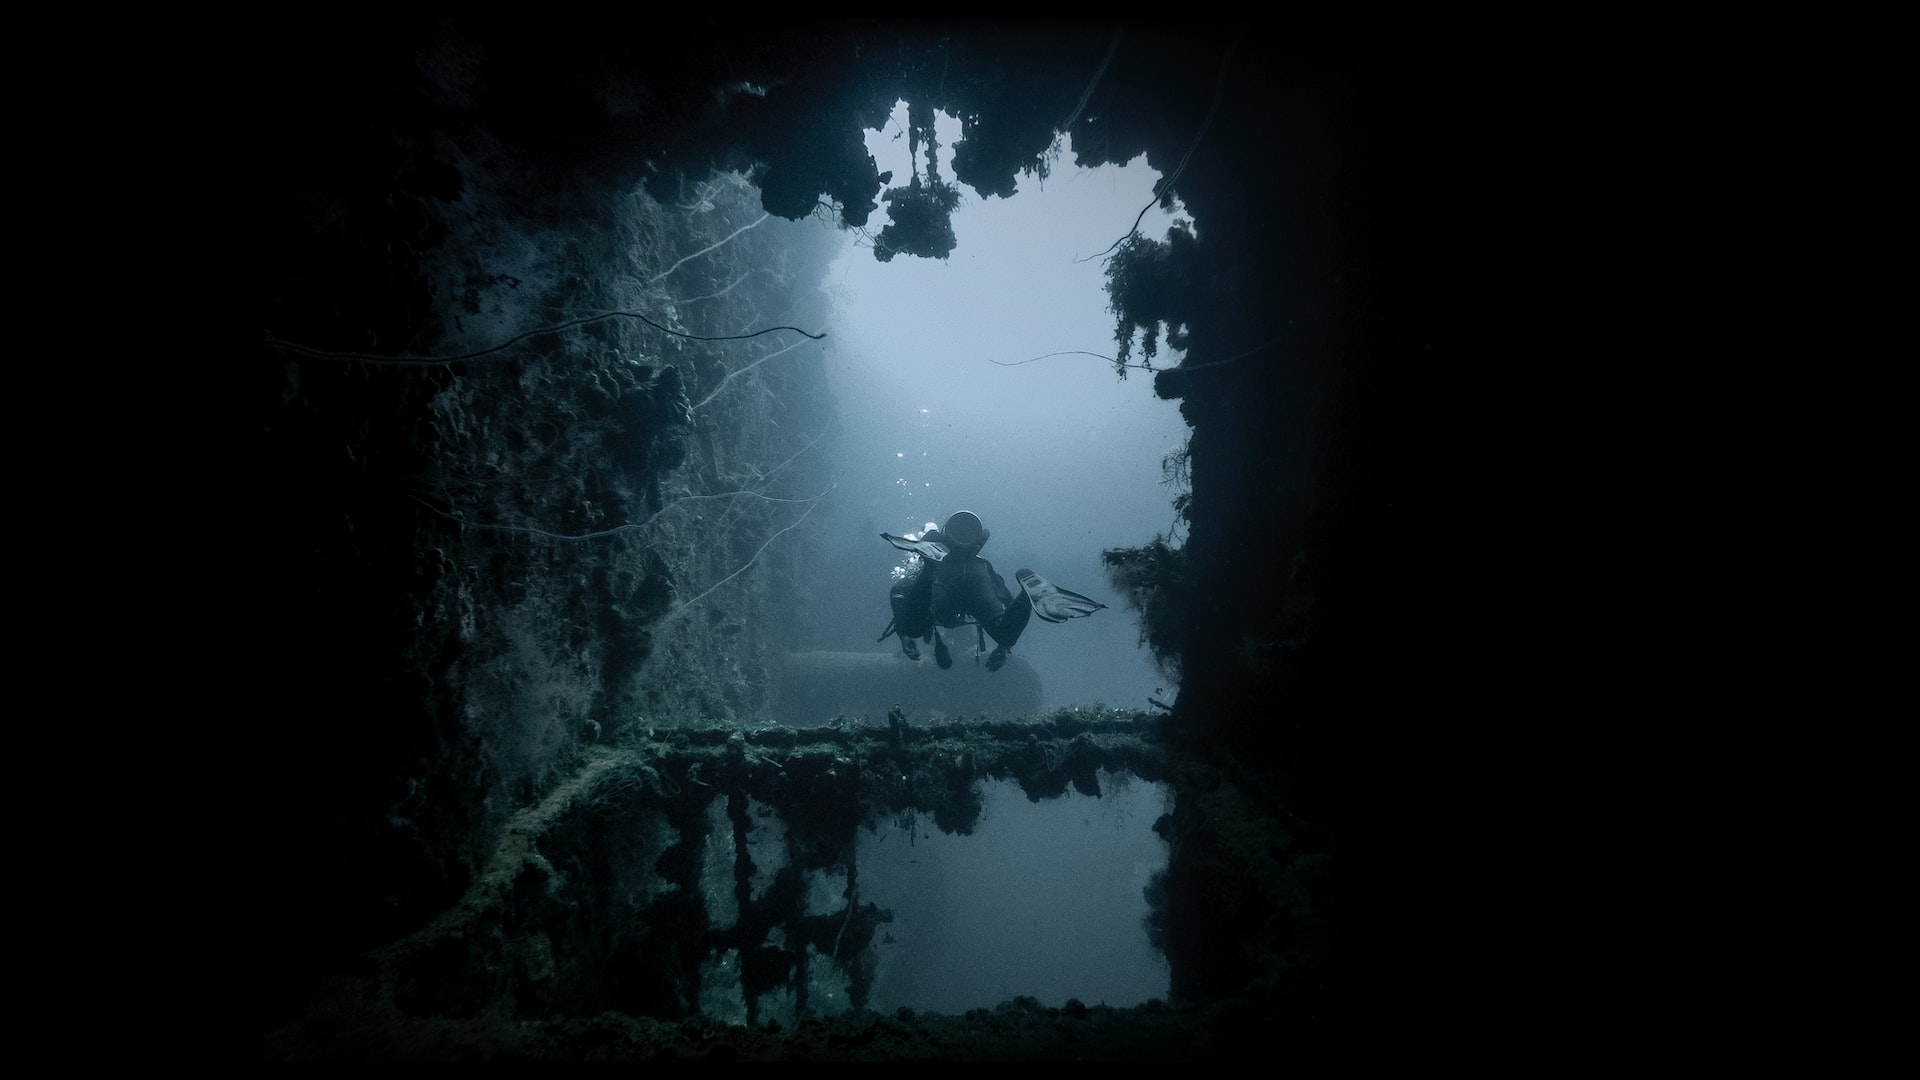 Dark wreck with scuba diver